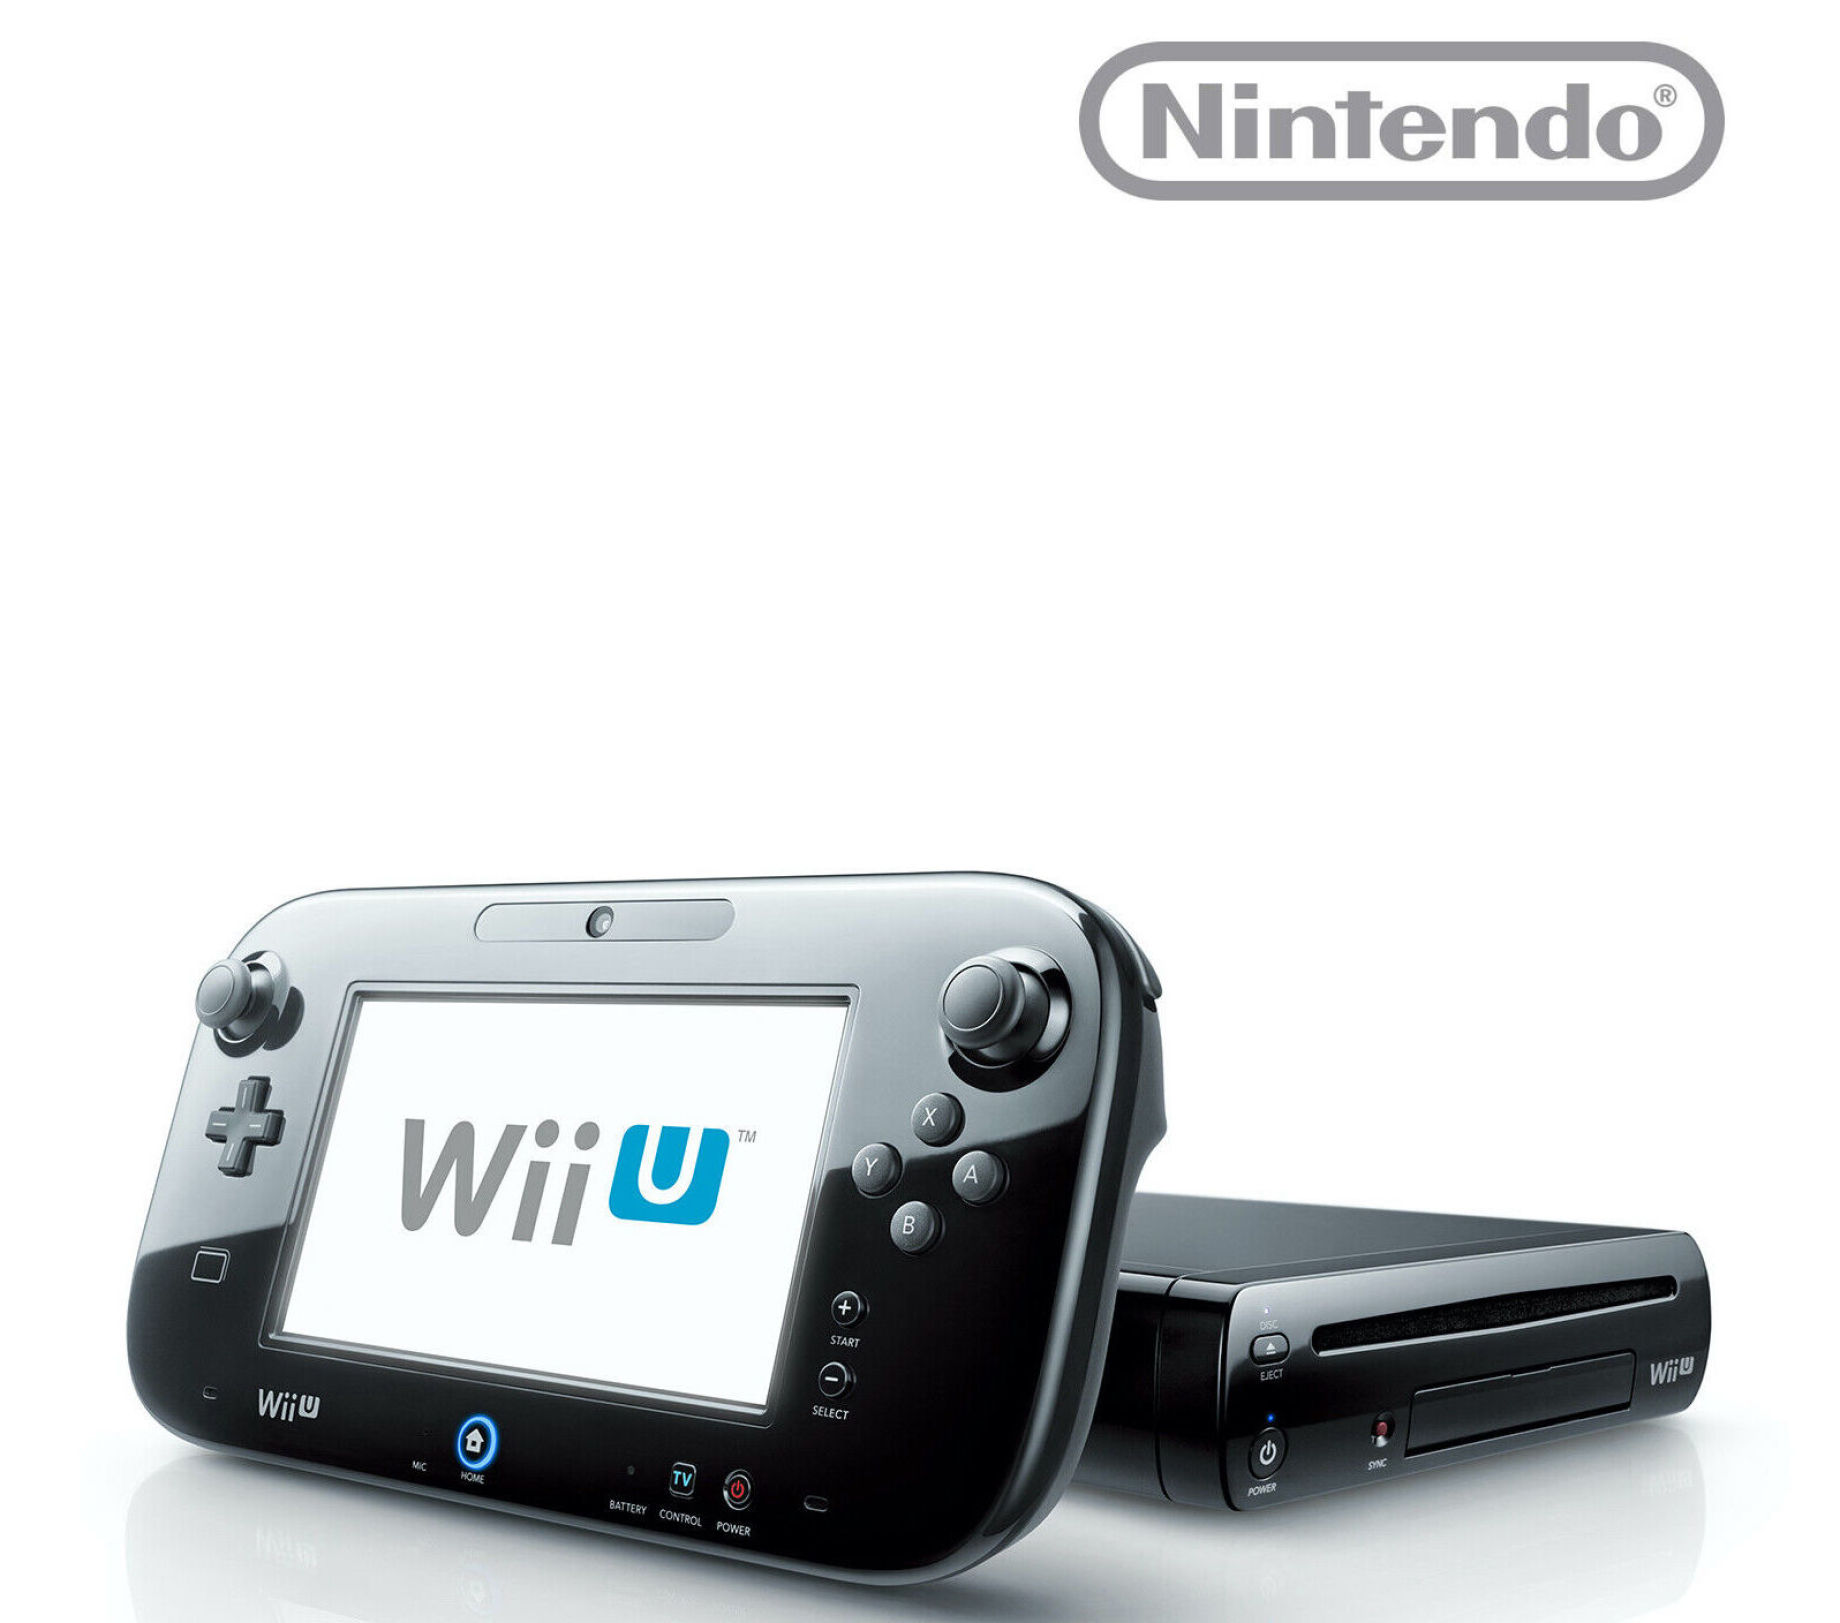 Nintendo DS games coming to WiiU Virtual Console - Tech Digest